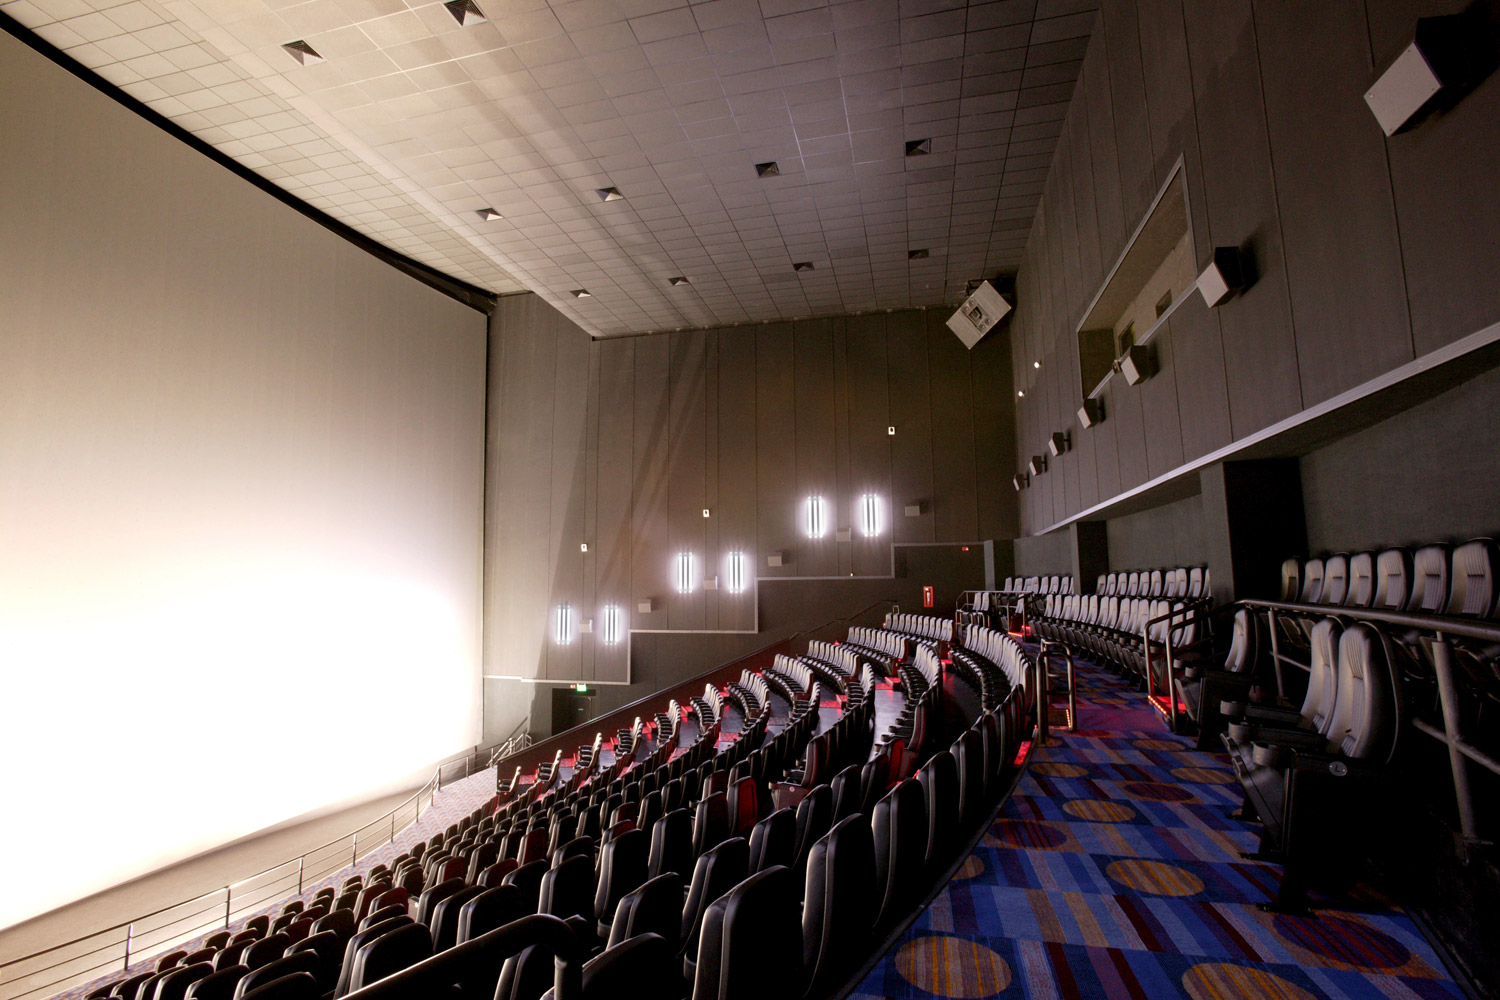 imax 3d cinema